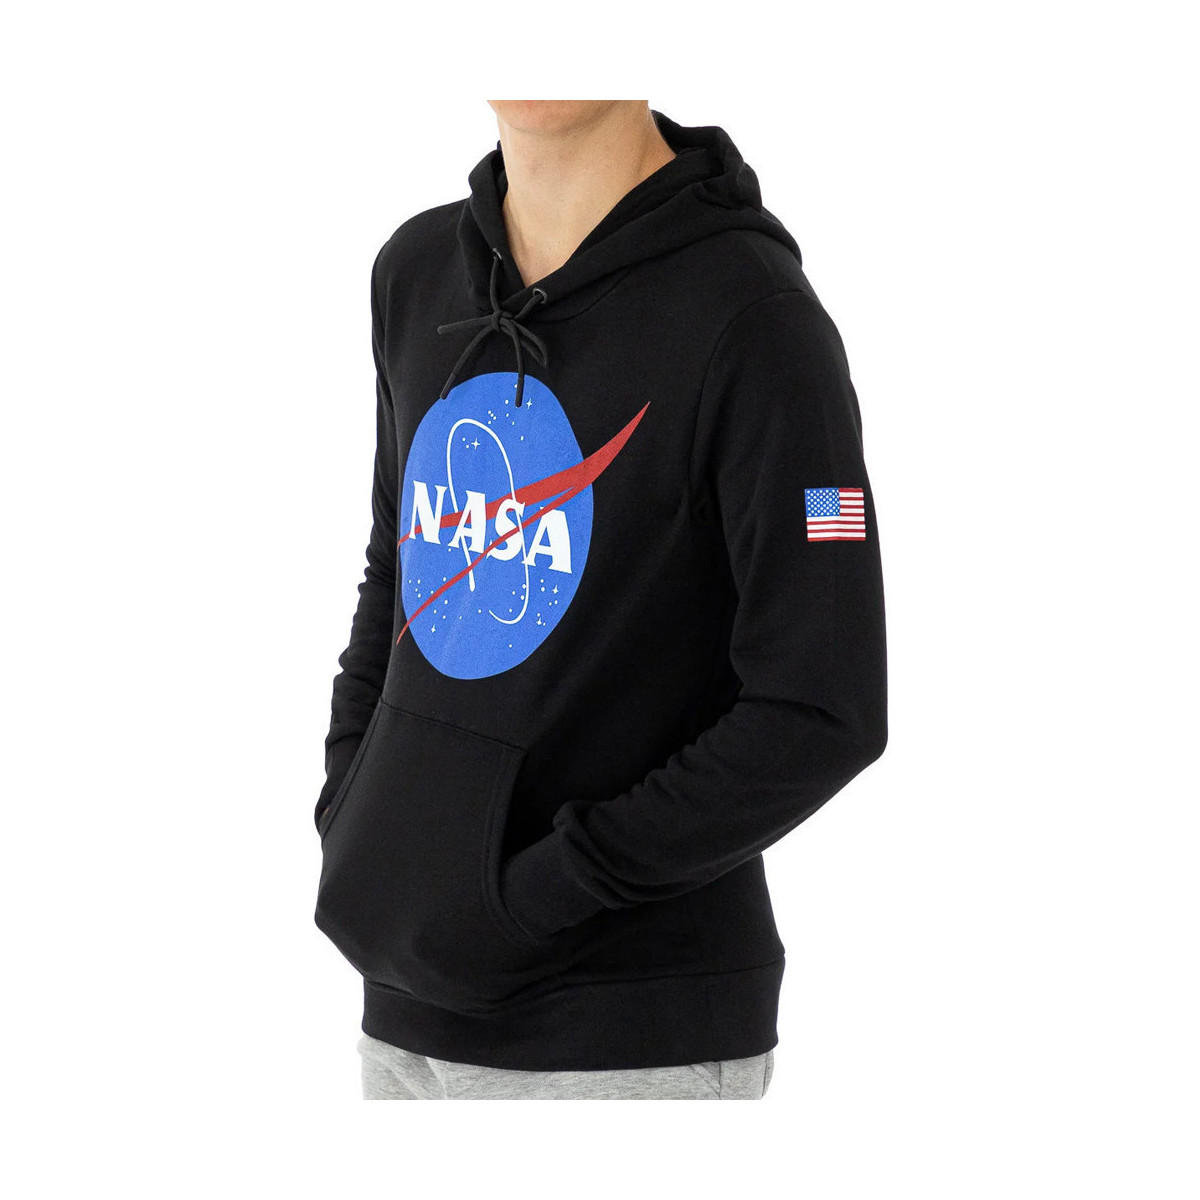 Abbigliamento Uomo Felpe Nasa -NASA12H Nero